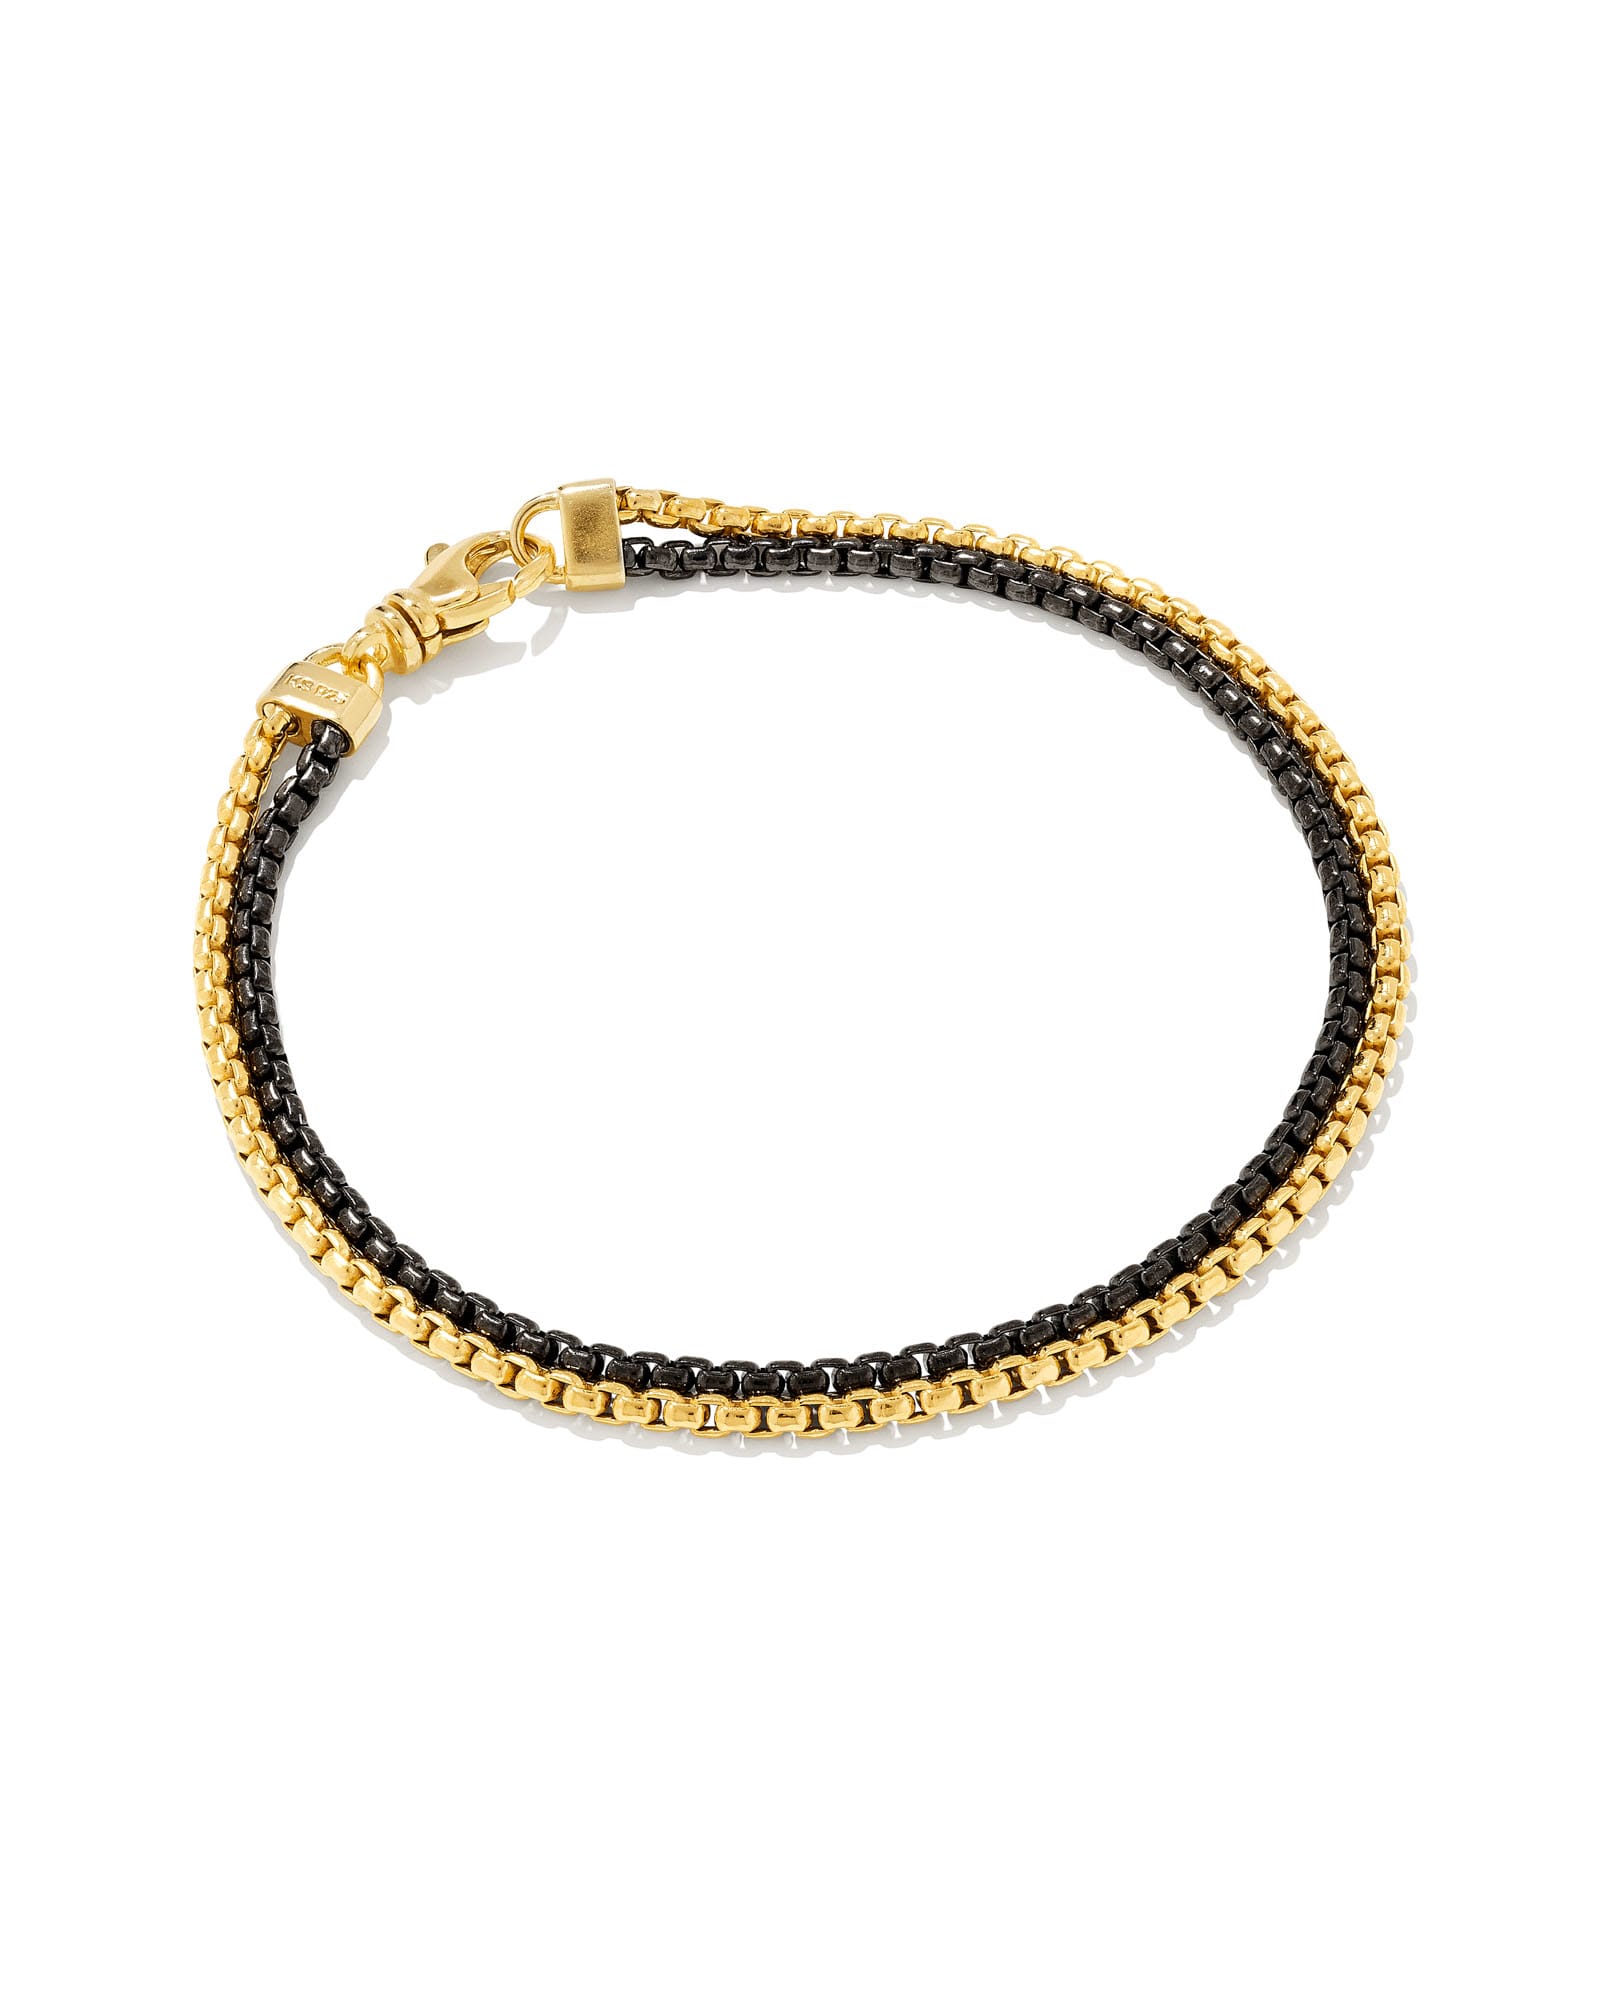 Wells Chain Bracelet in 18k Gold Vermeil and Black Hematite image number 0.0